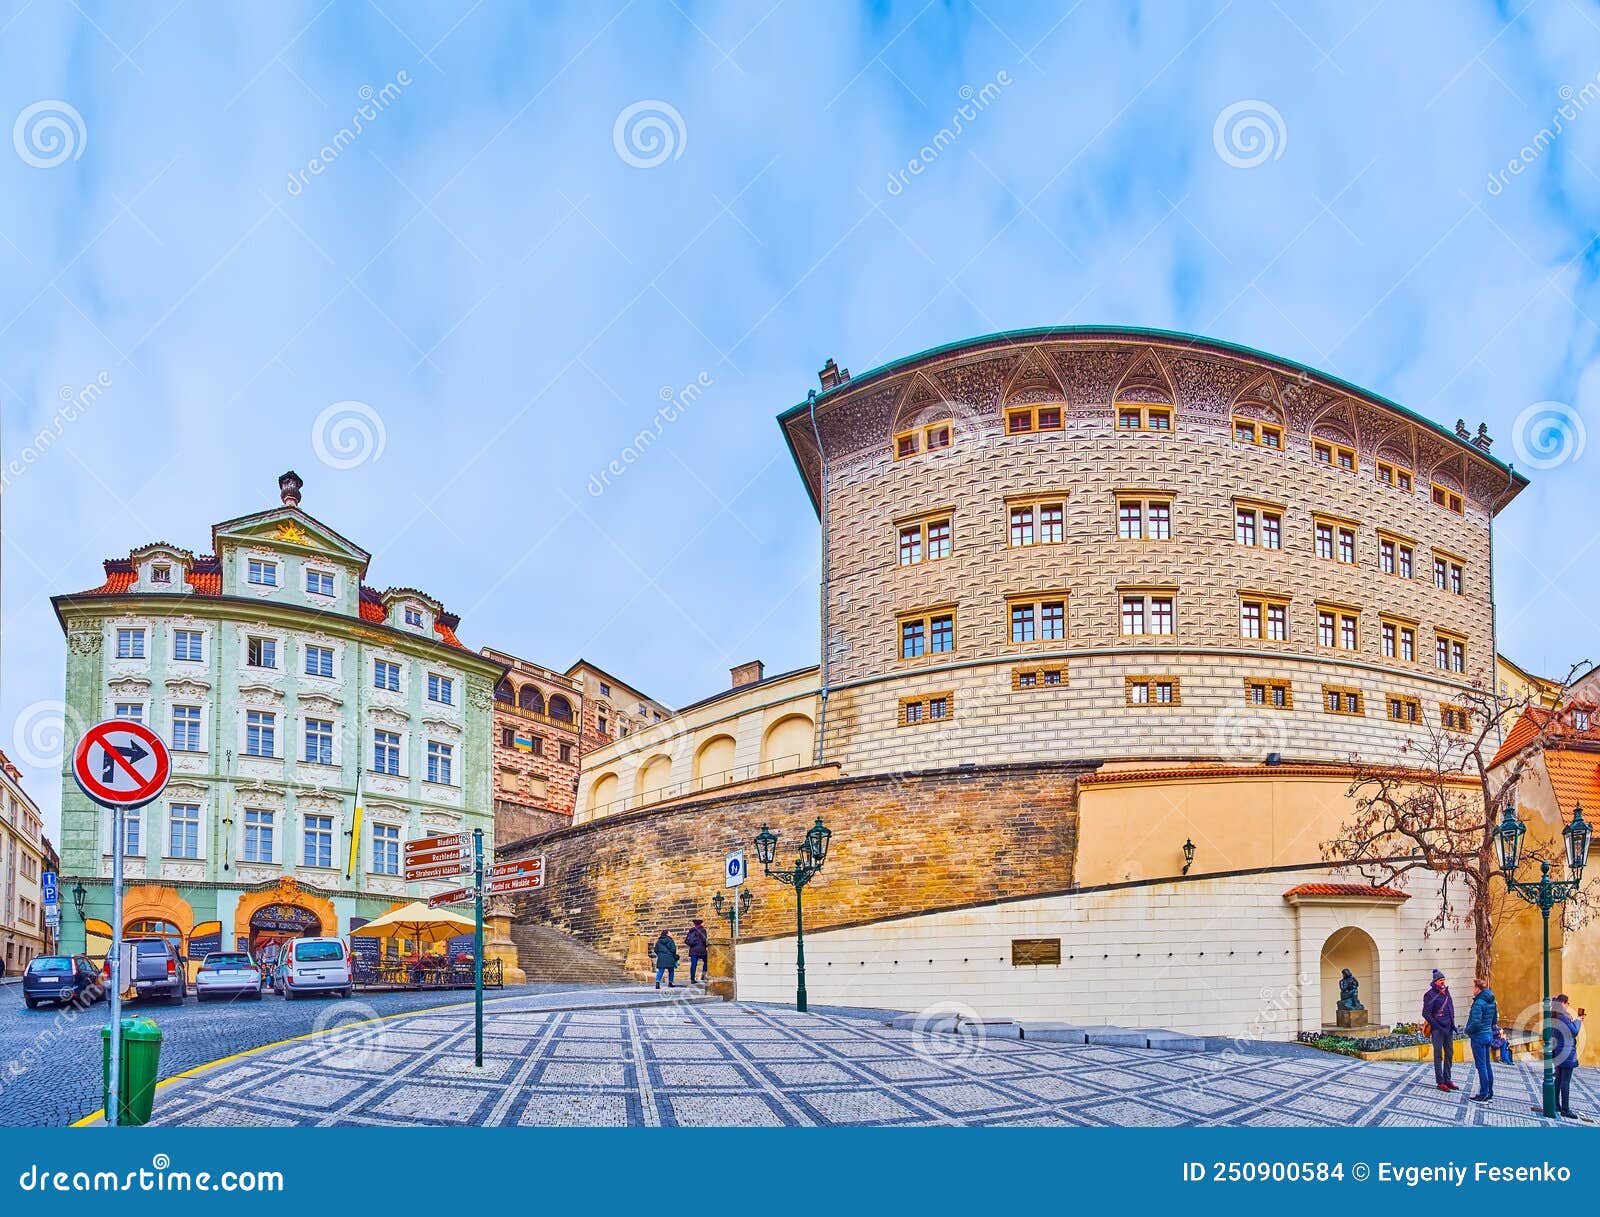 the ramparts of prague castle, golden star house and schwarzenberg palace, czech republic